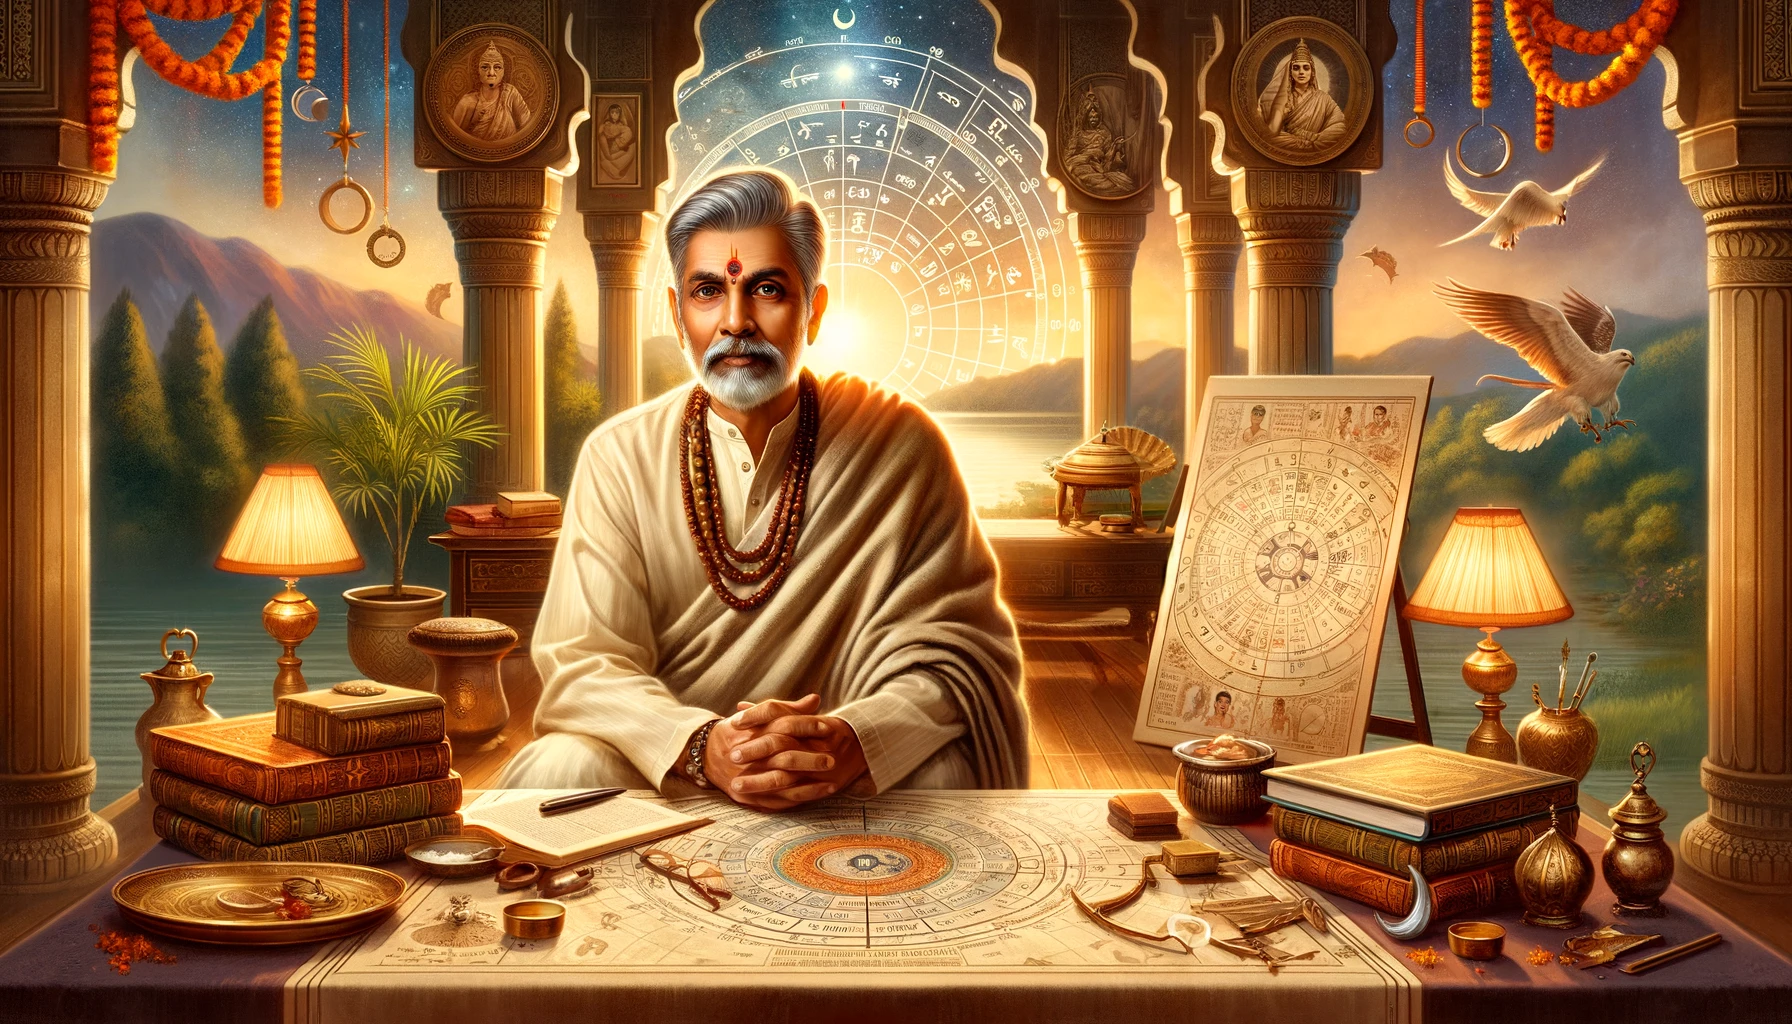 Jyotish Acharya Devraj Ji: Guiding Lives Through Astrology